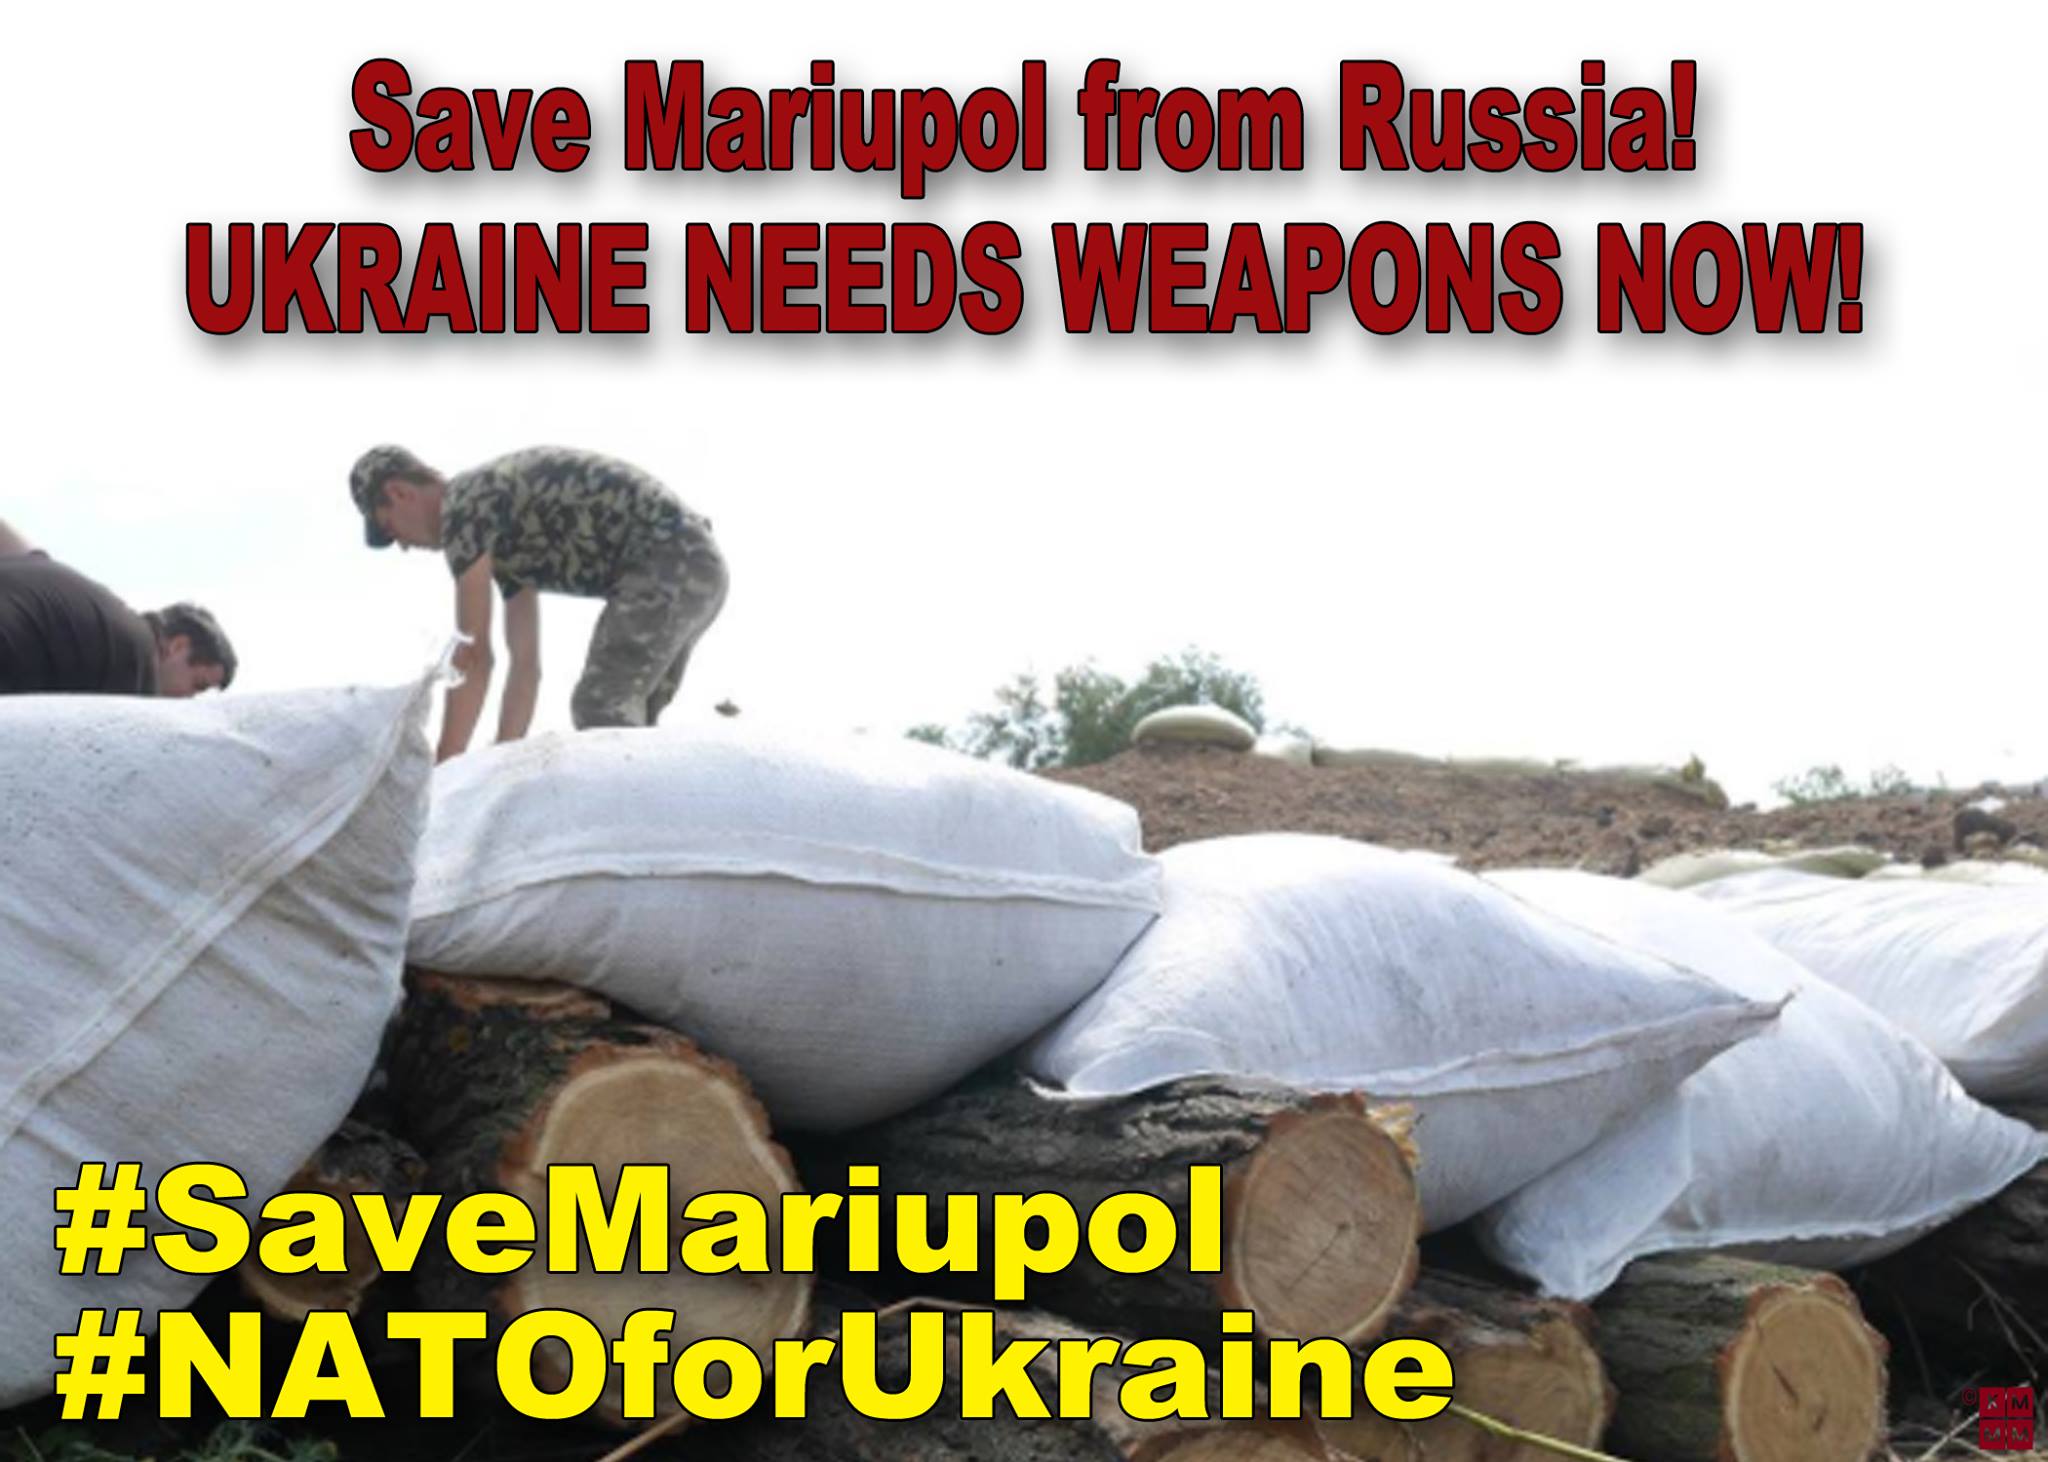 #NATOforUkraine twitter storm ~~